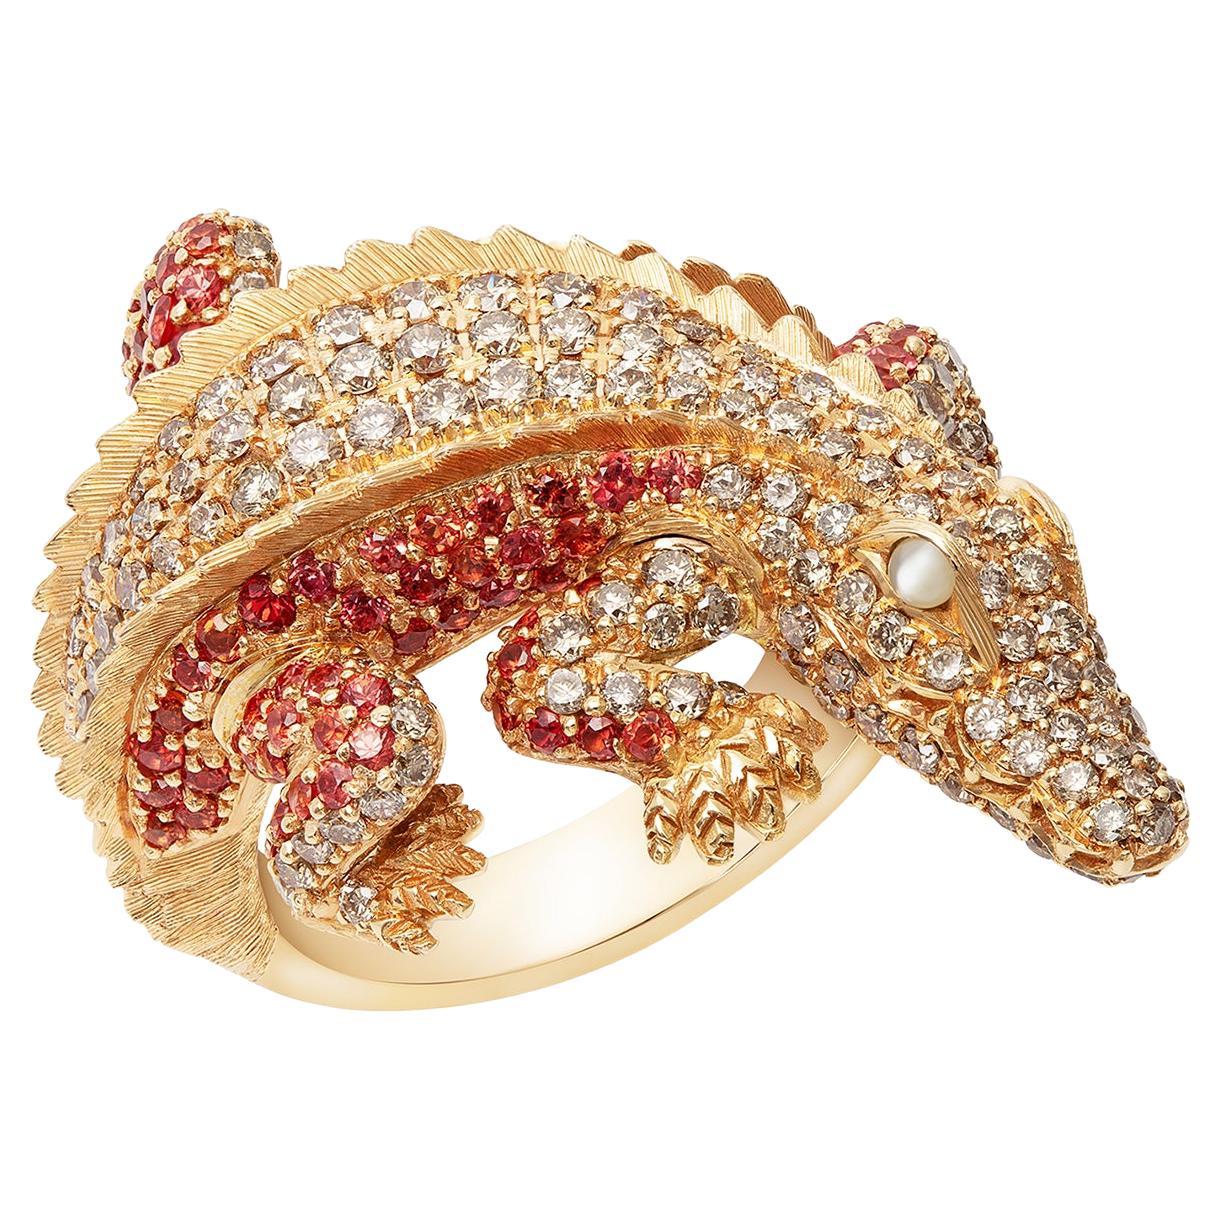 Authentic Alligator Diamond Rose 18k Gold Ring for Her